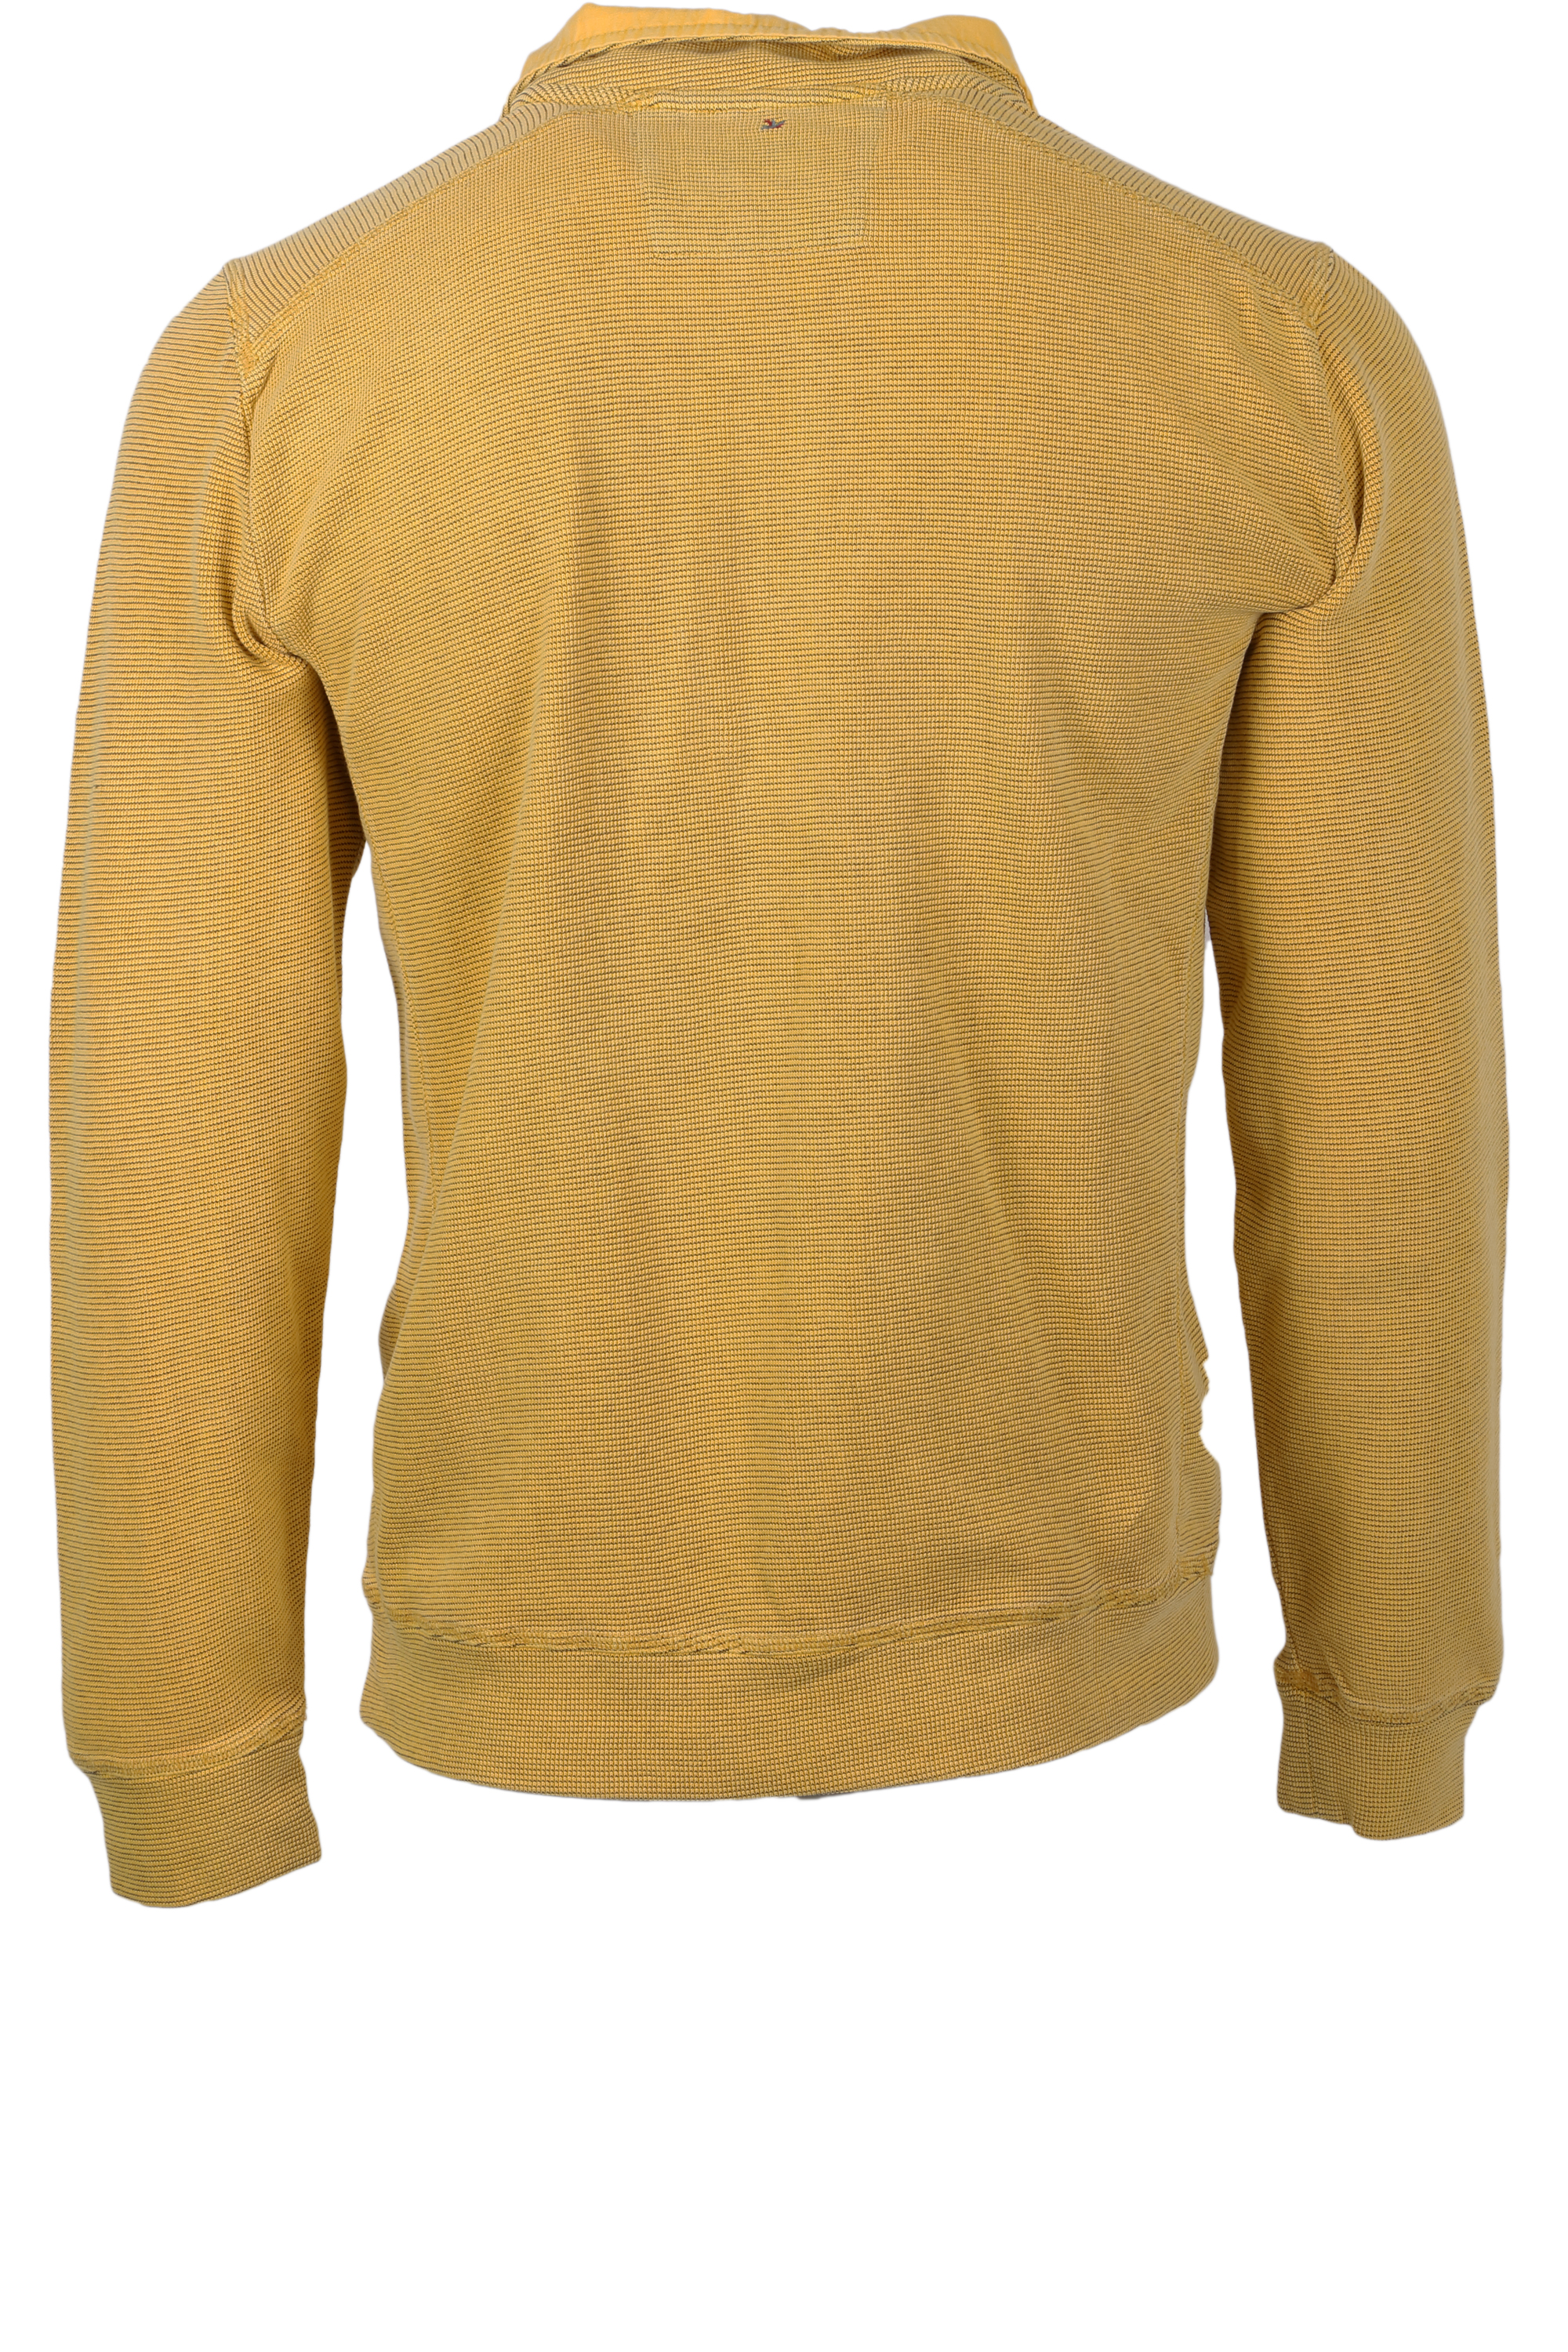 NZA New Zealand Auckland Sweatshirt Arapohue - gelb L